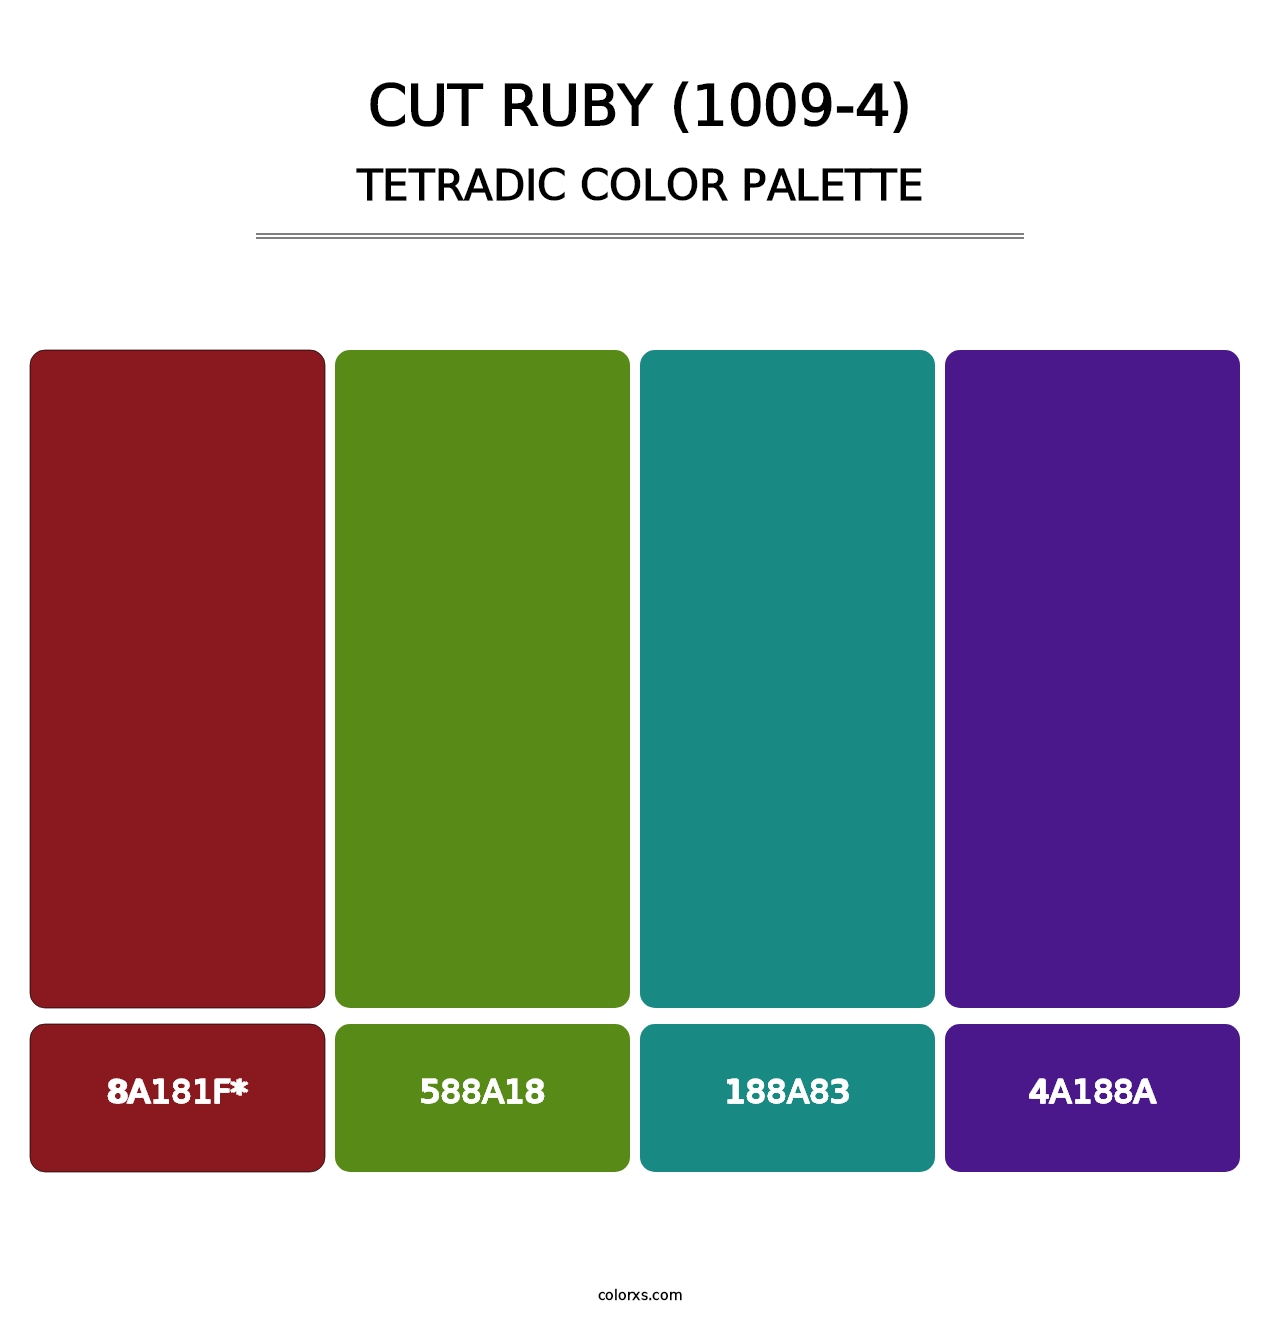 Cut Ruby (1009-4) - Tetradic Color Palette